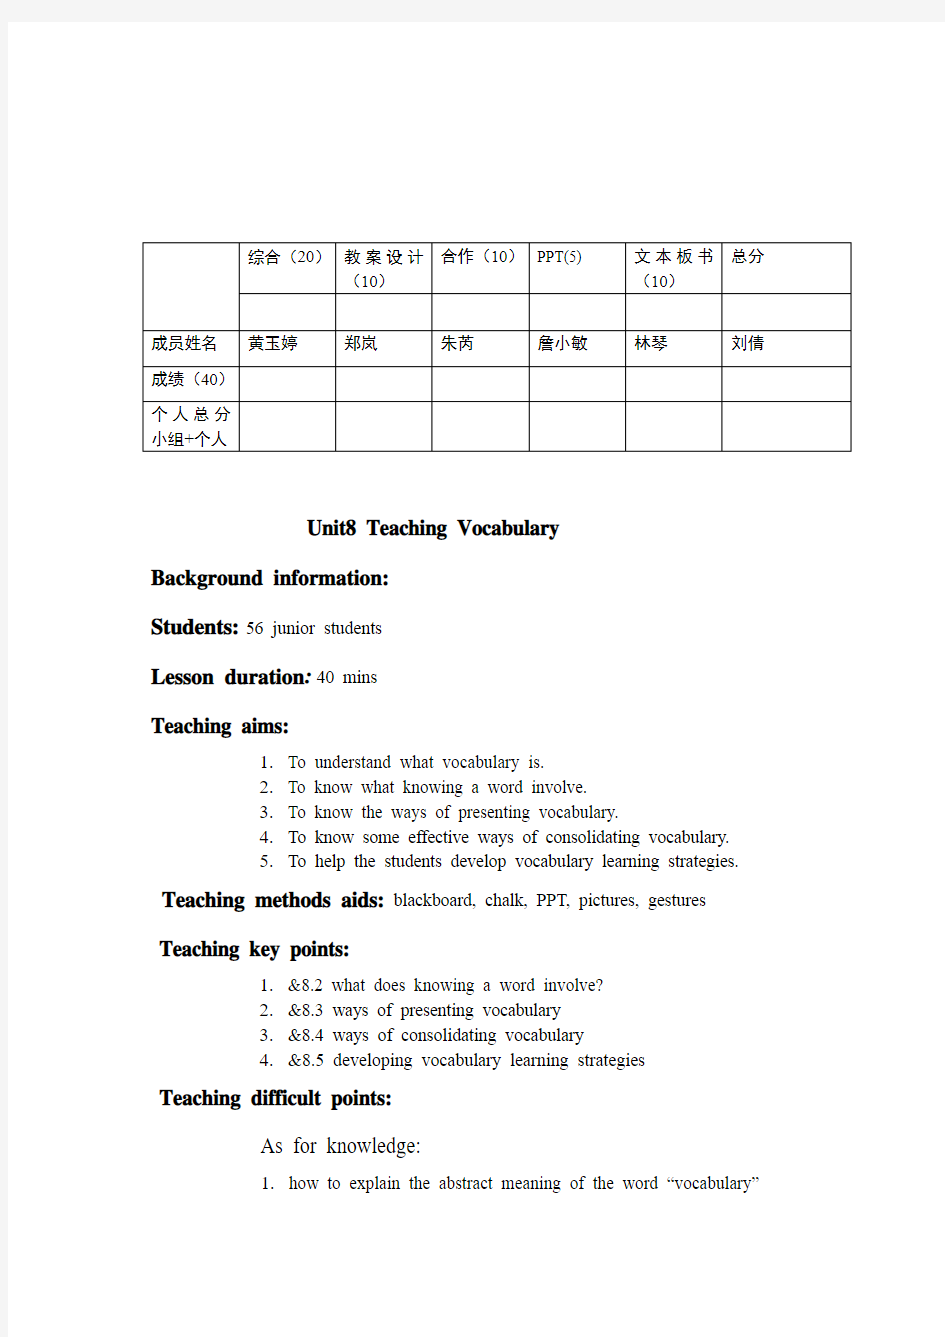 Unit8 Teaching Vocabulary Lesson Planning.doc